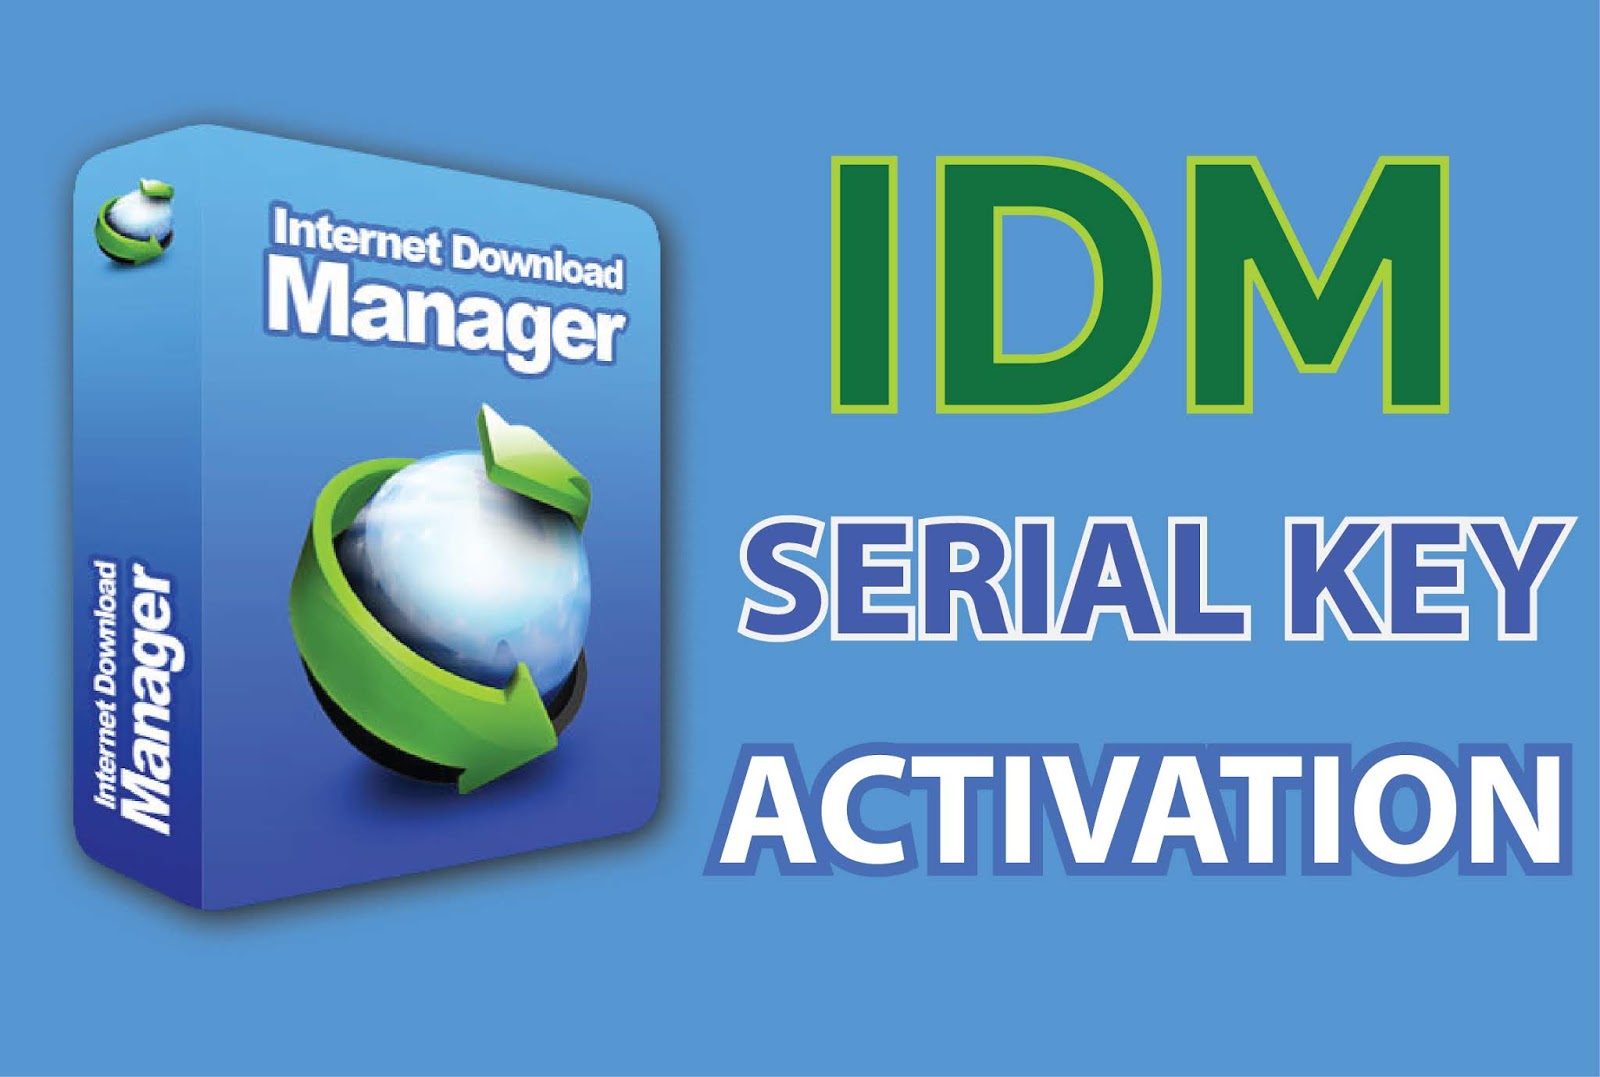 internet download manager serial number generator free software